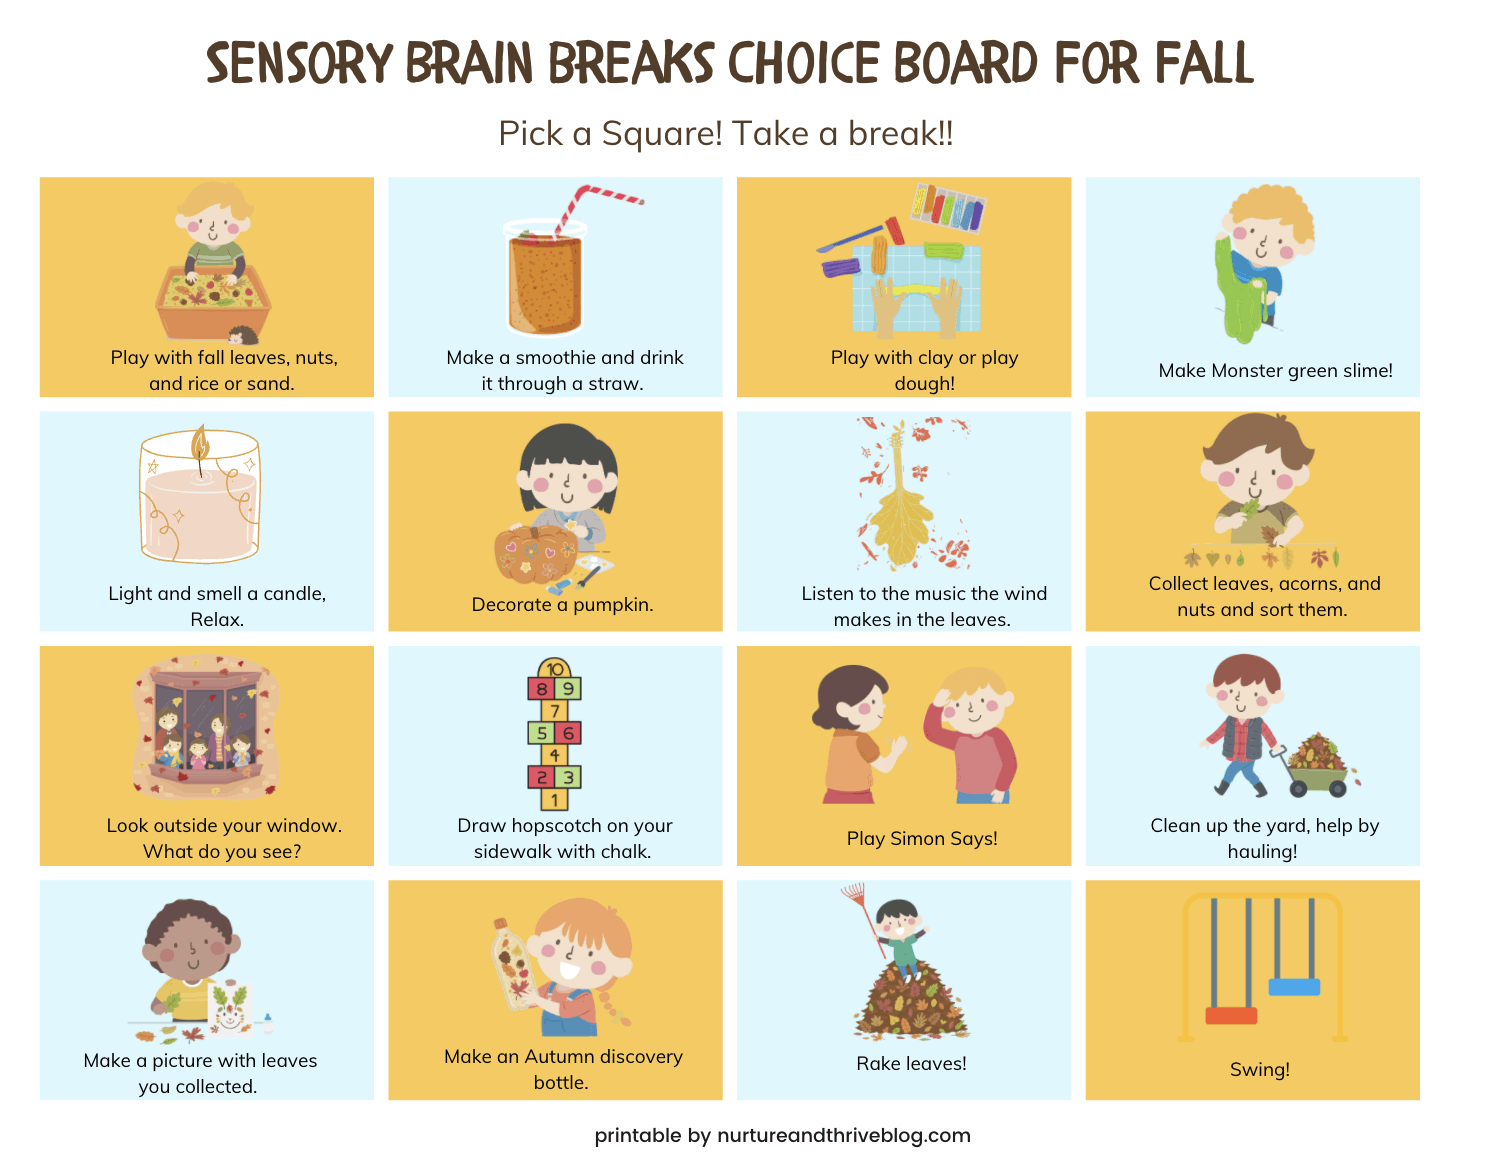 sensory choice board